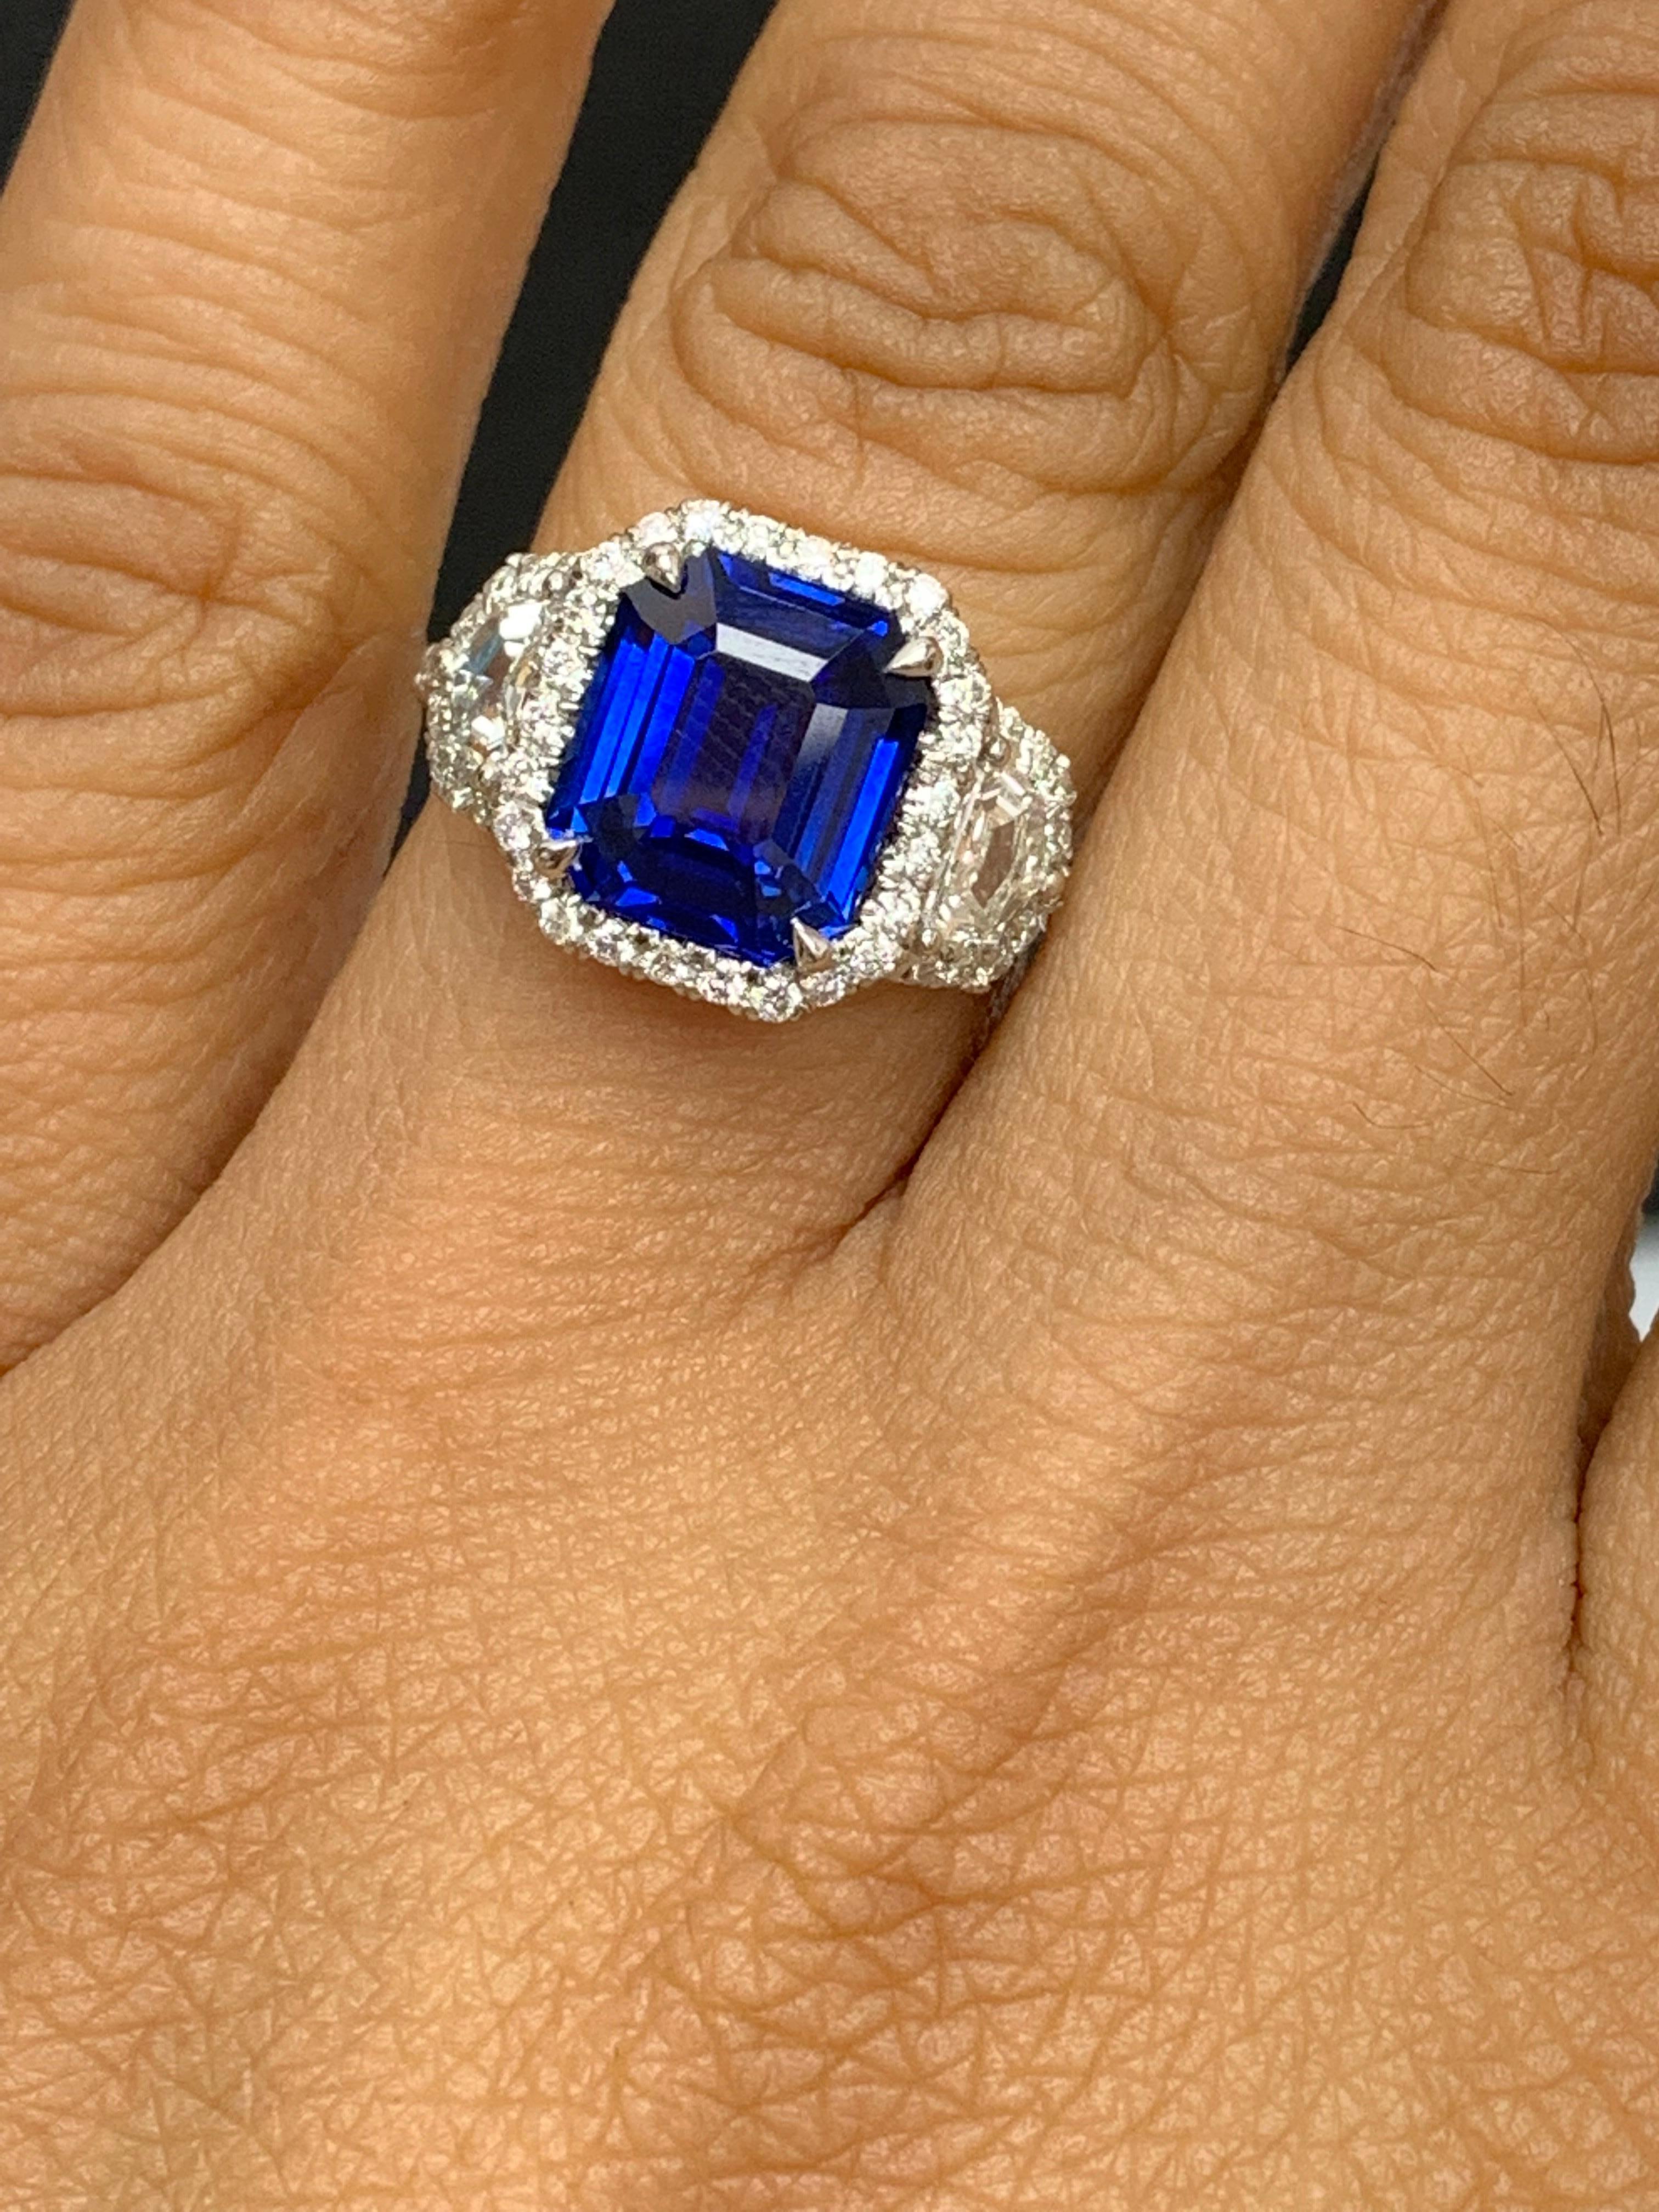 Certified 4.07 Carat Emerald Cut Sapphire Diamond 3 Stone Halo Ring in Platinum For Sale 2